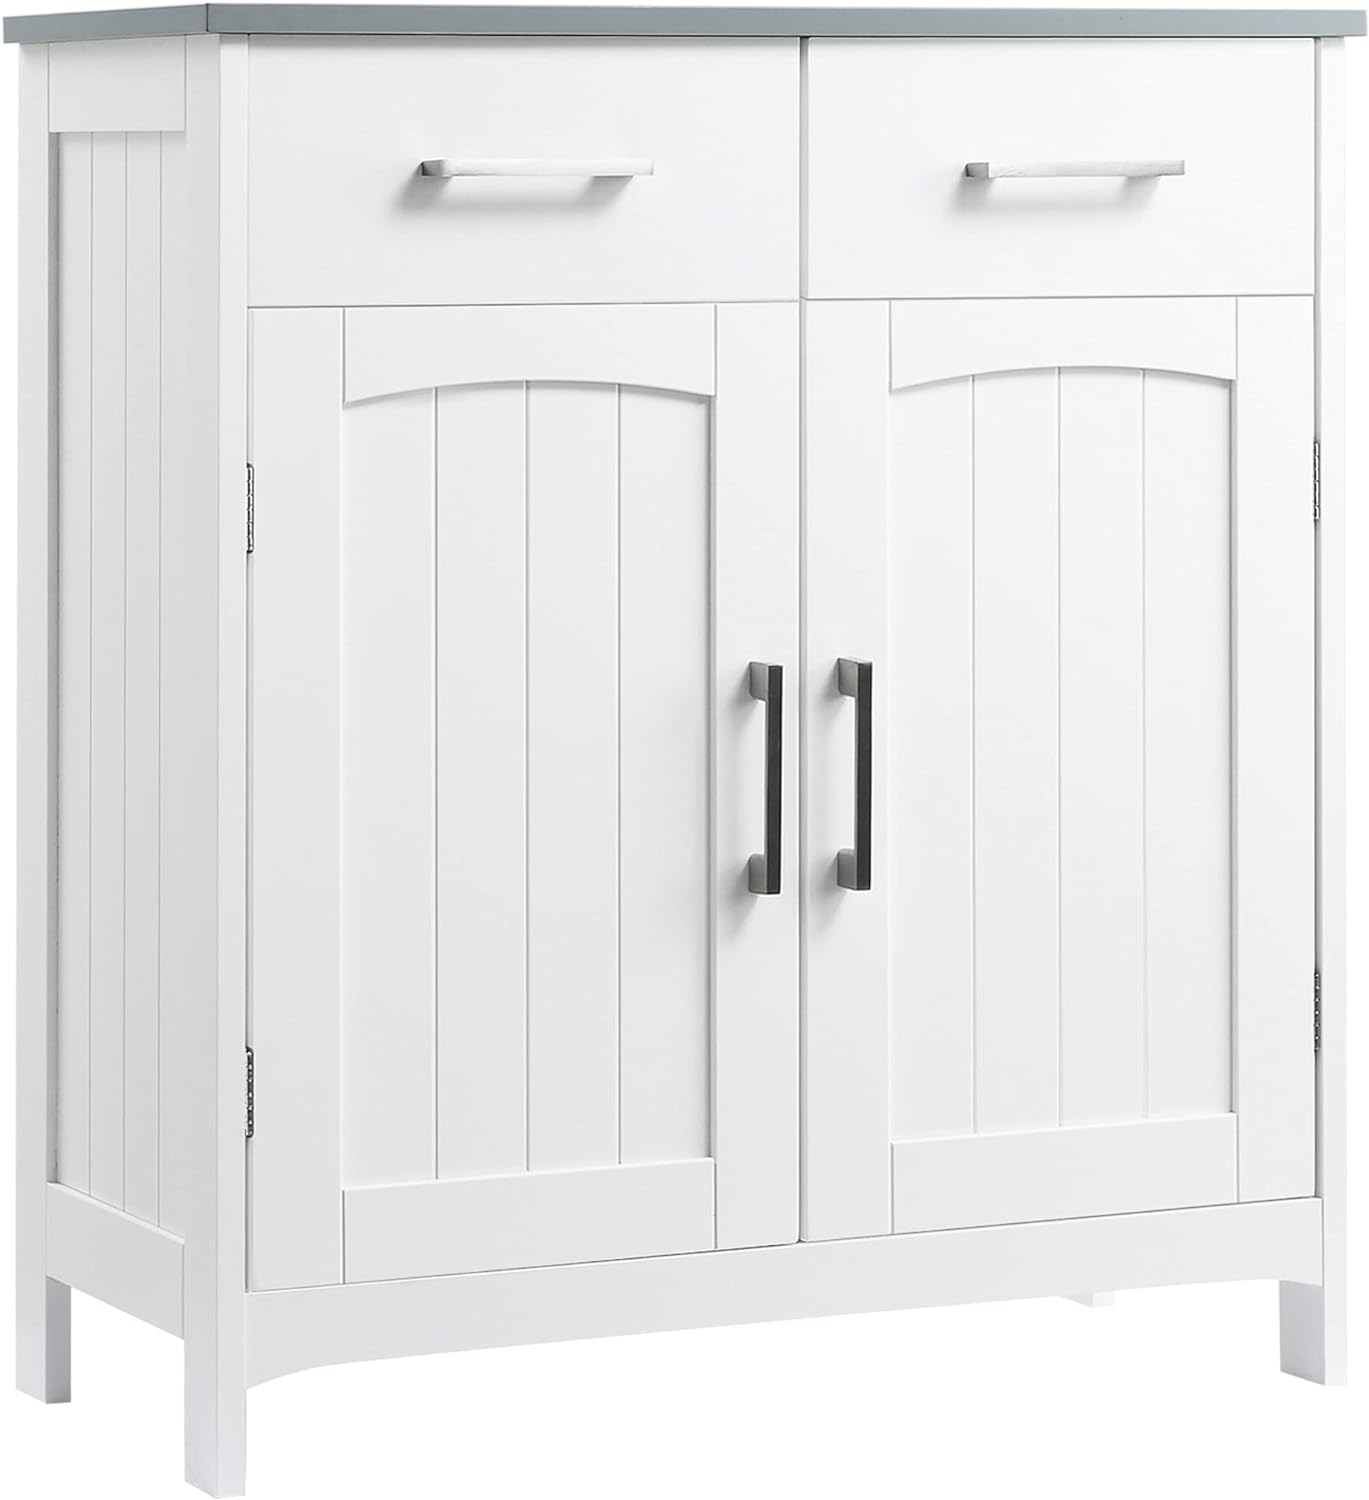 kleankin Bathroom Floor Cabinet, Freestanding Linen Cabinet, Storage Cabinet with 2 Drawers, Double Doors, Adjustable Shelf, White